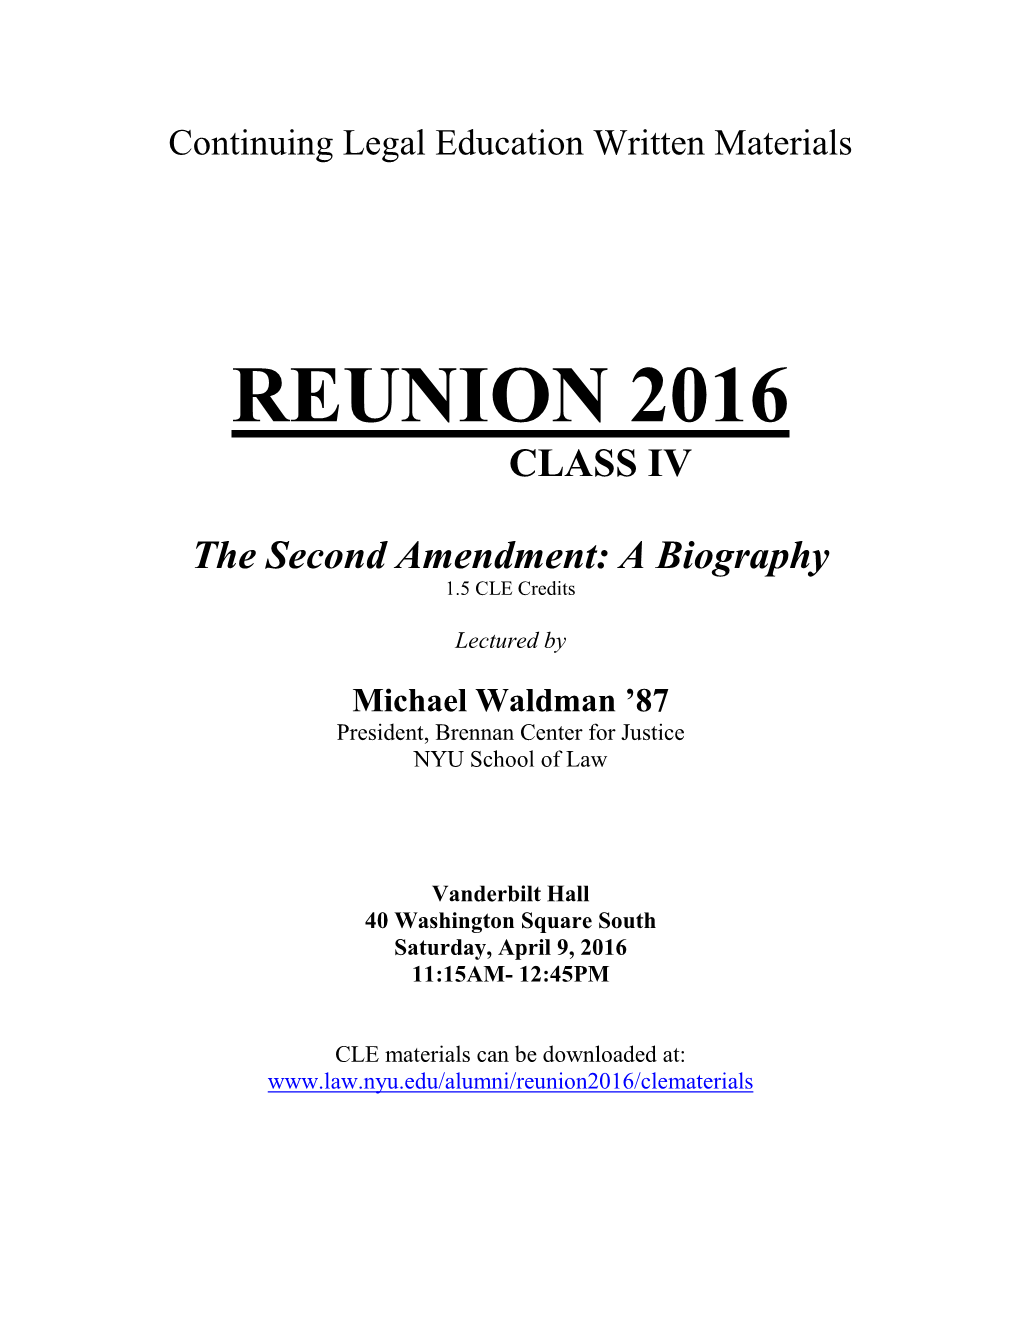 Reunion 2016 Class Iv